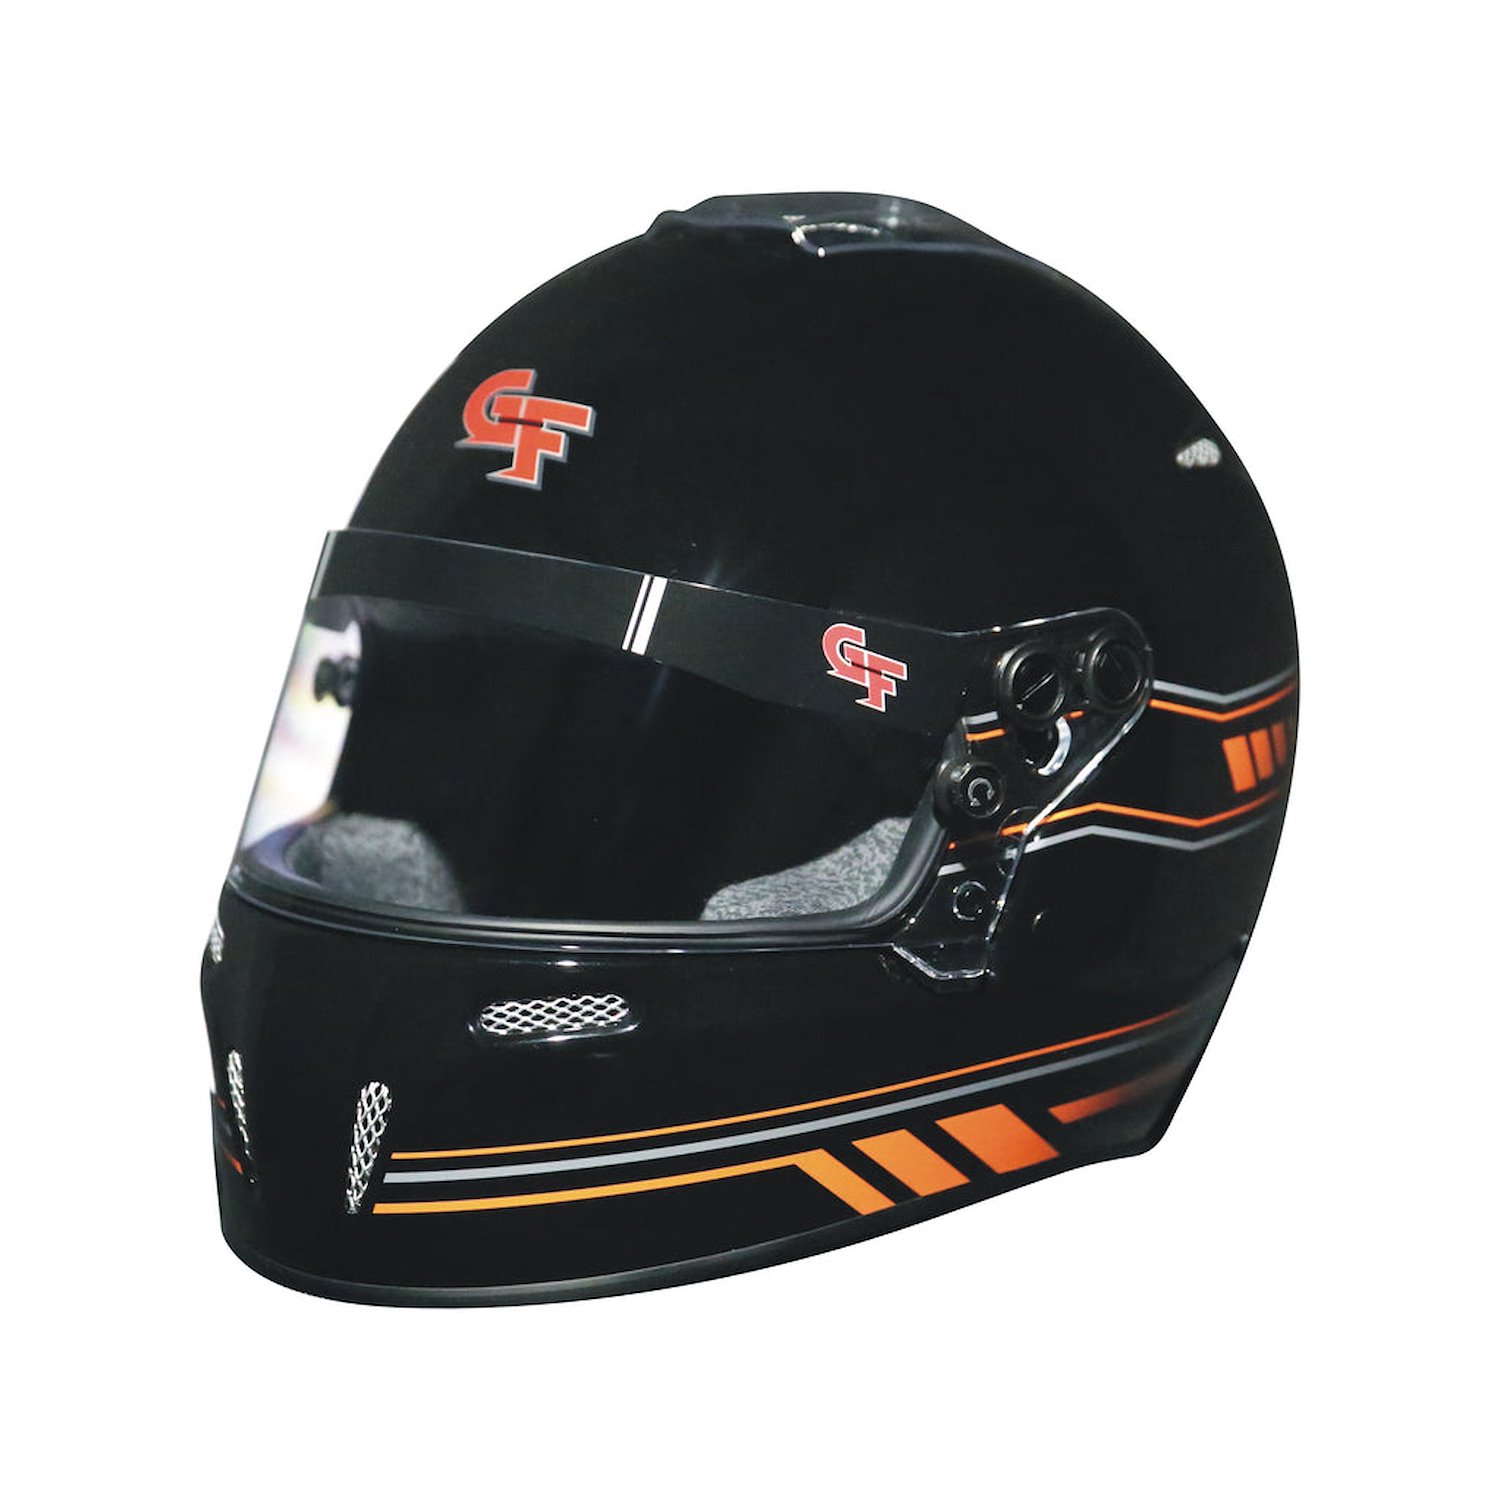 14102XLGB2 Helmet, Nighthawk Graphics SA2020, Extra Large, Black/Orange